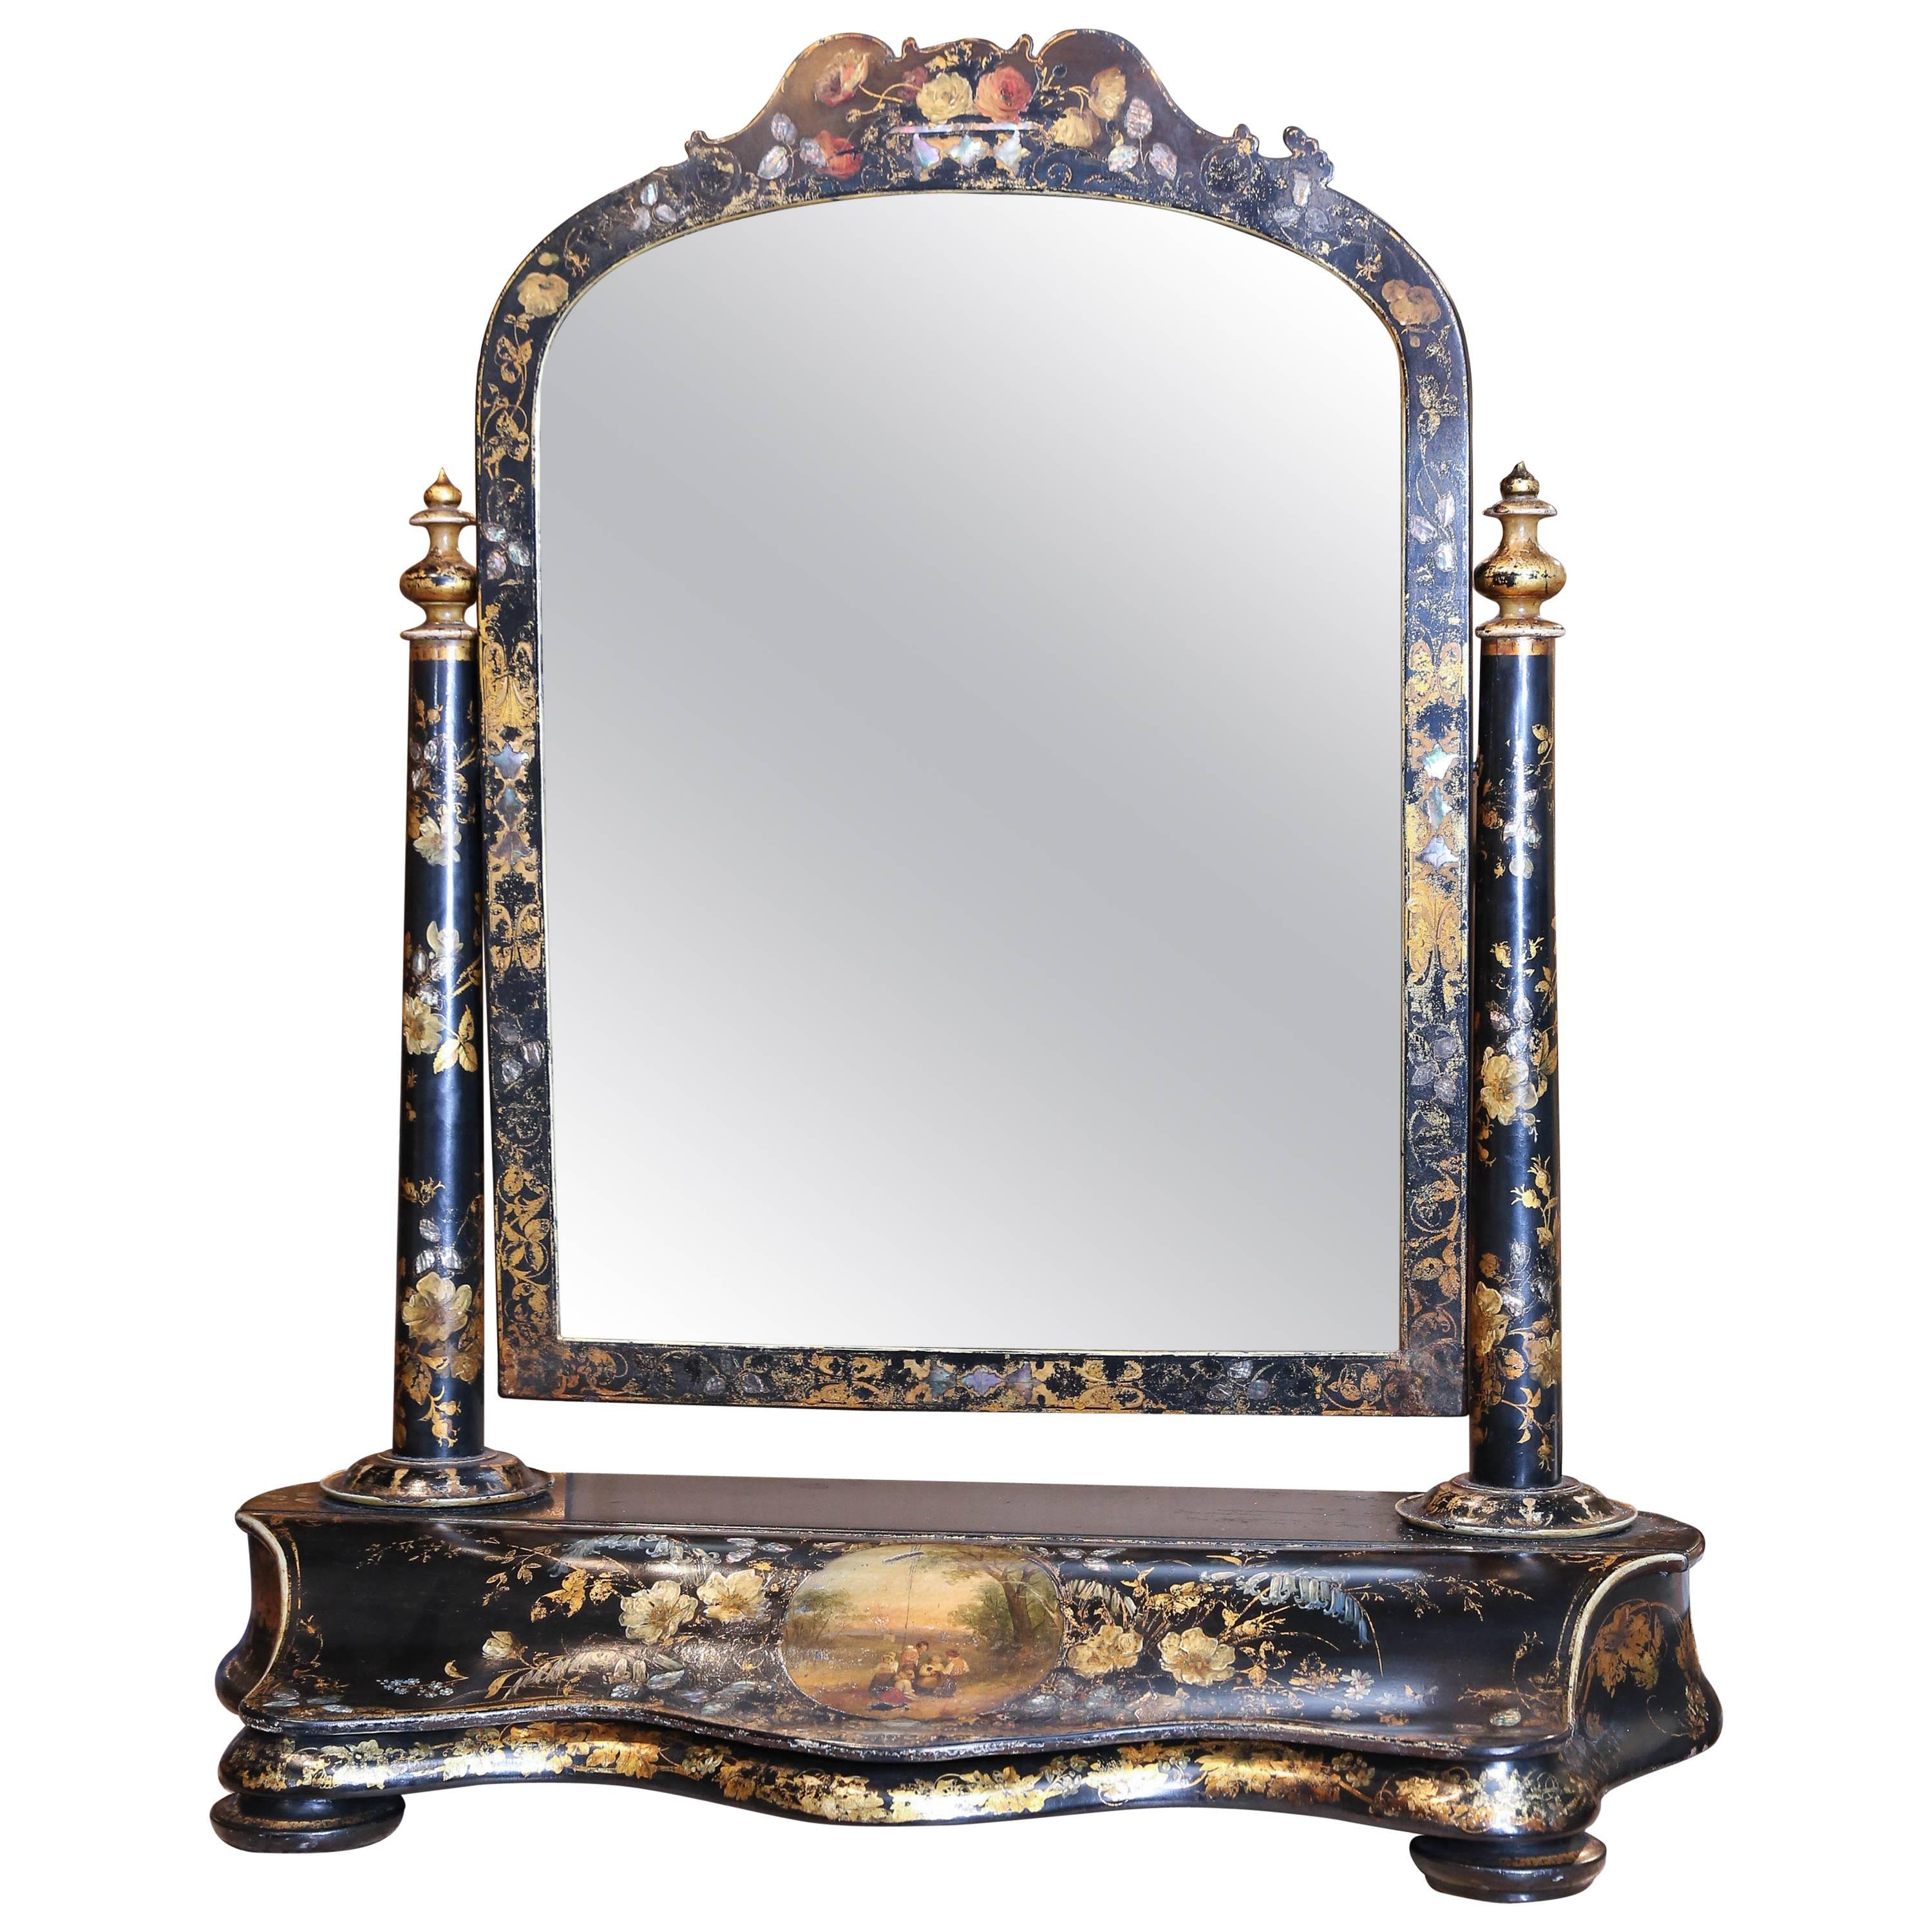 Papier-Mâché Adjustable Vanity Mirror with Drawer, 19th Century